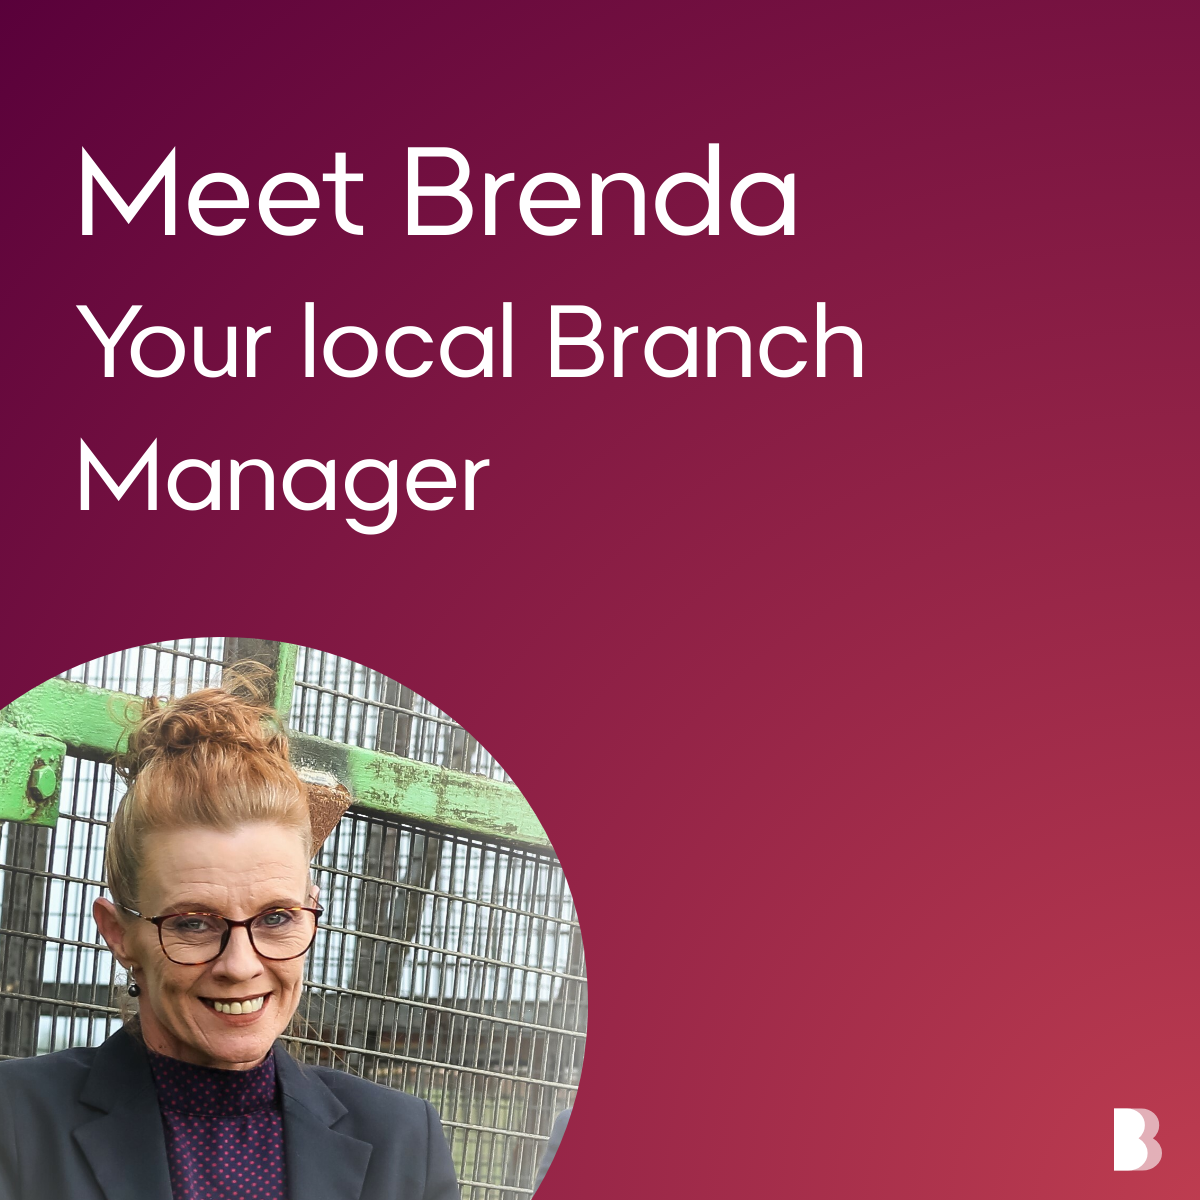 Brenda Taifalos – Snr Branch Manager – Innisfail & Tully